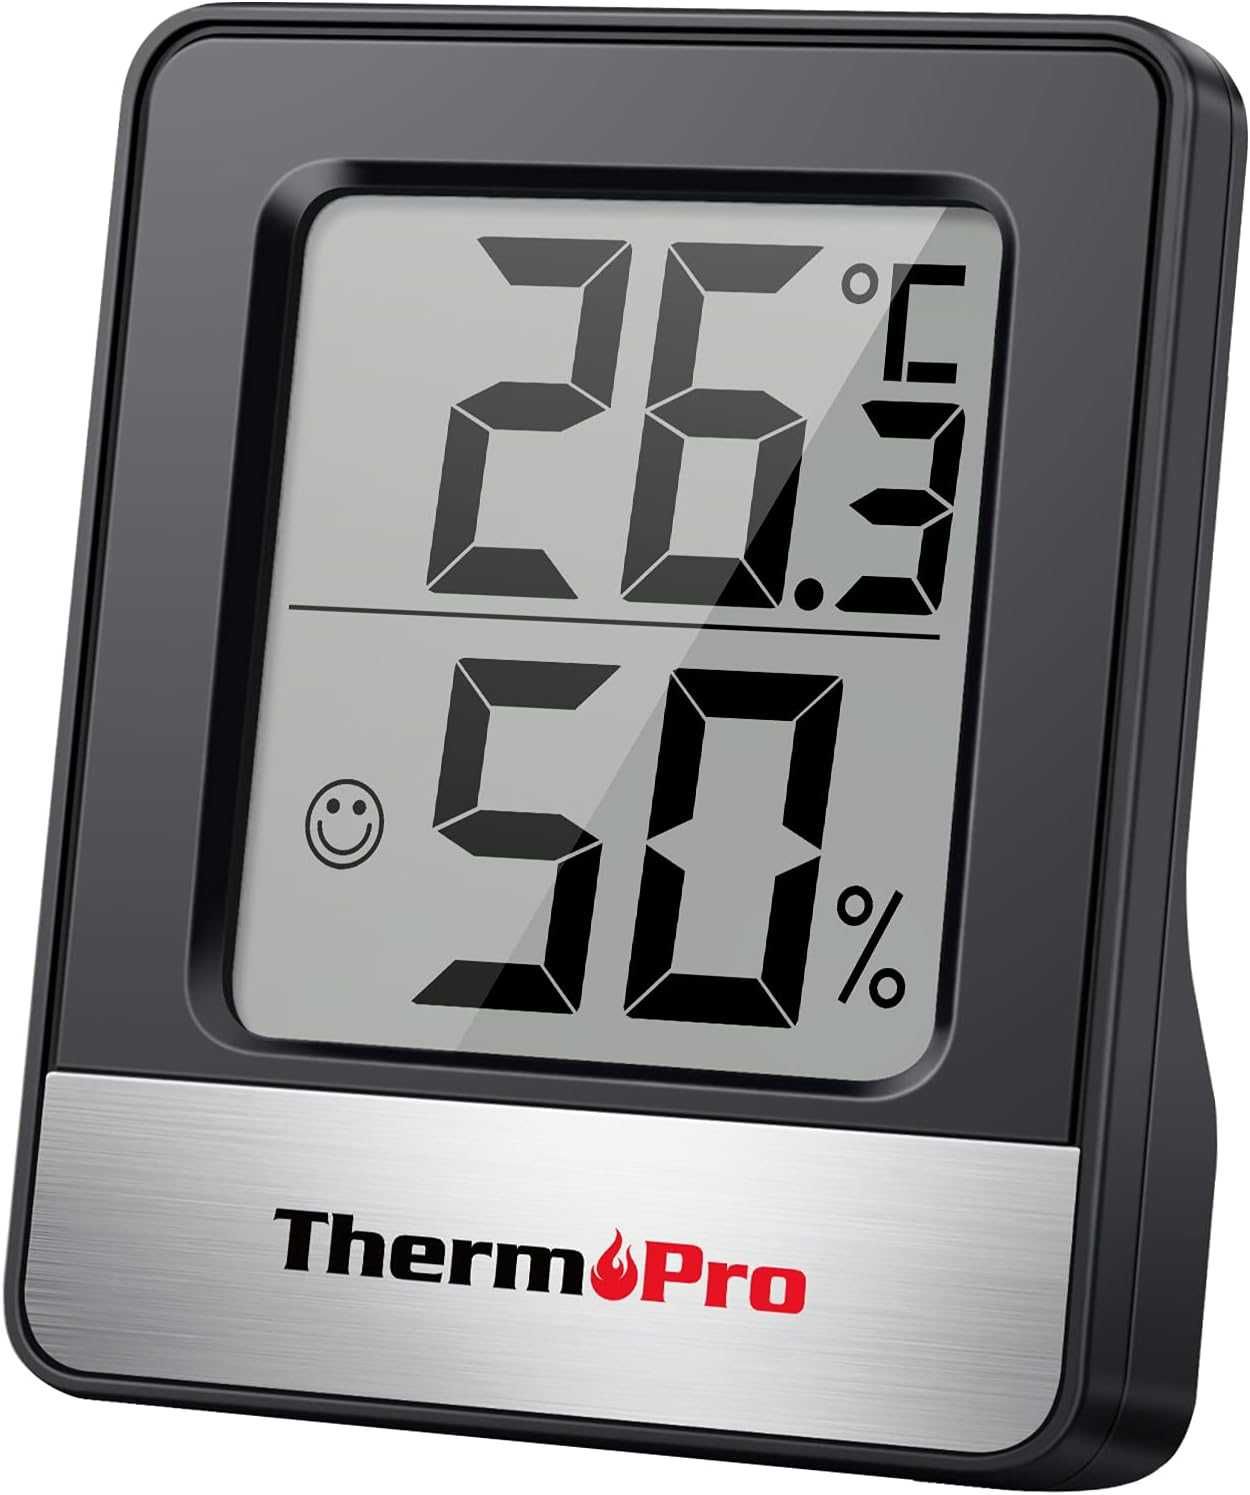 ThermoPro TP49B termômetro e pequeno higrômetro digital interno